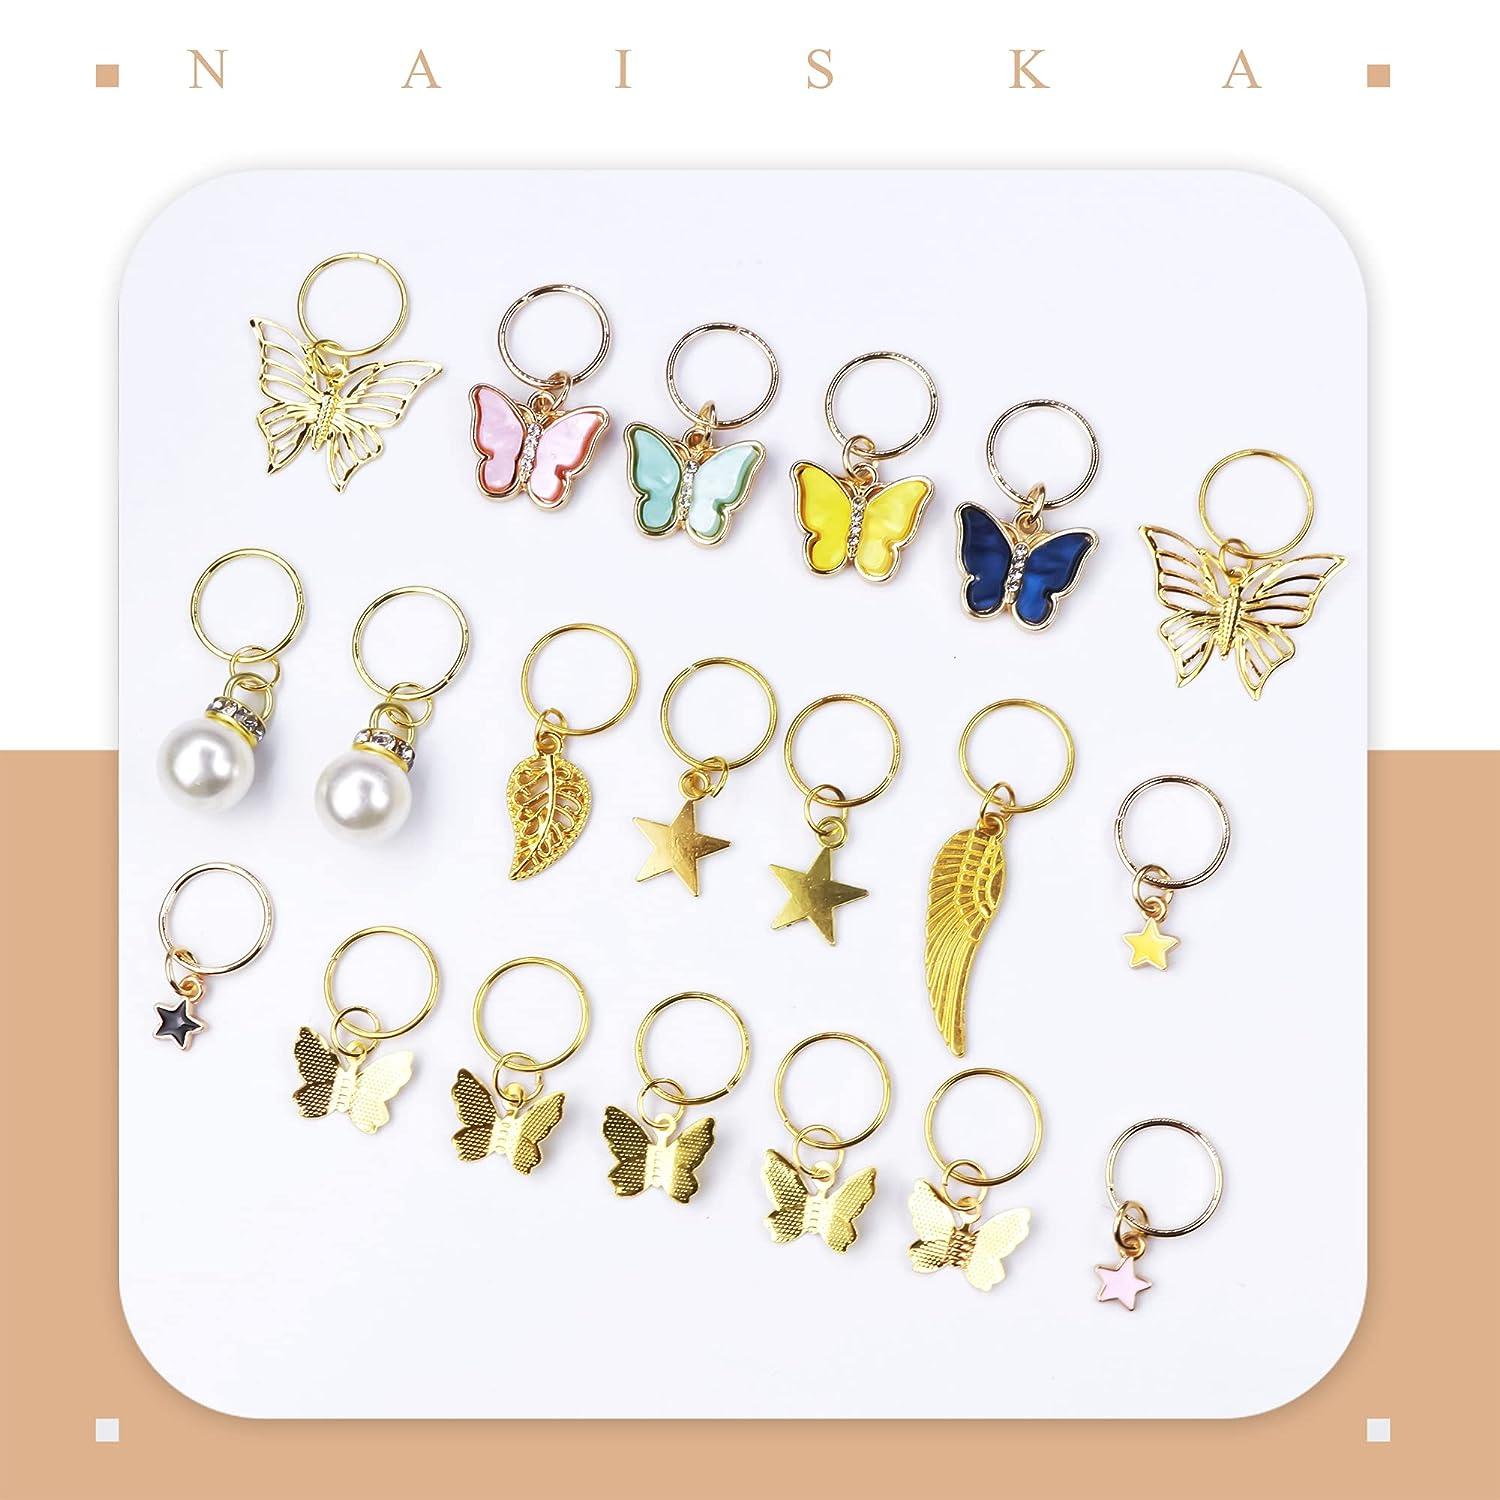 Naiska 20pcs Gold Butterfly Braid Clips Pearl Shiny Hair Dreadlock Accessories Colorful Butterflies Pendant Crystal Dreadlock Charms Star Braid